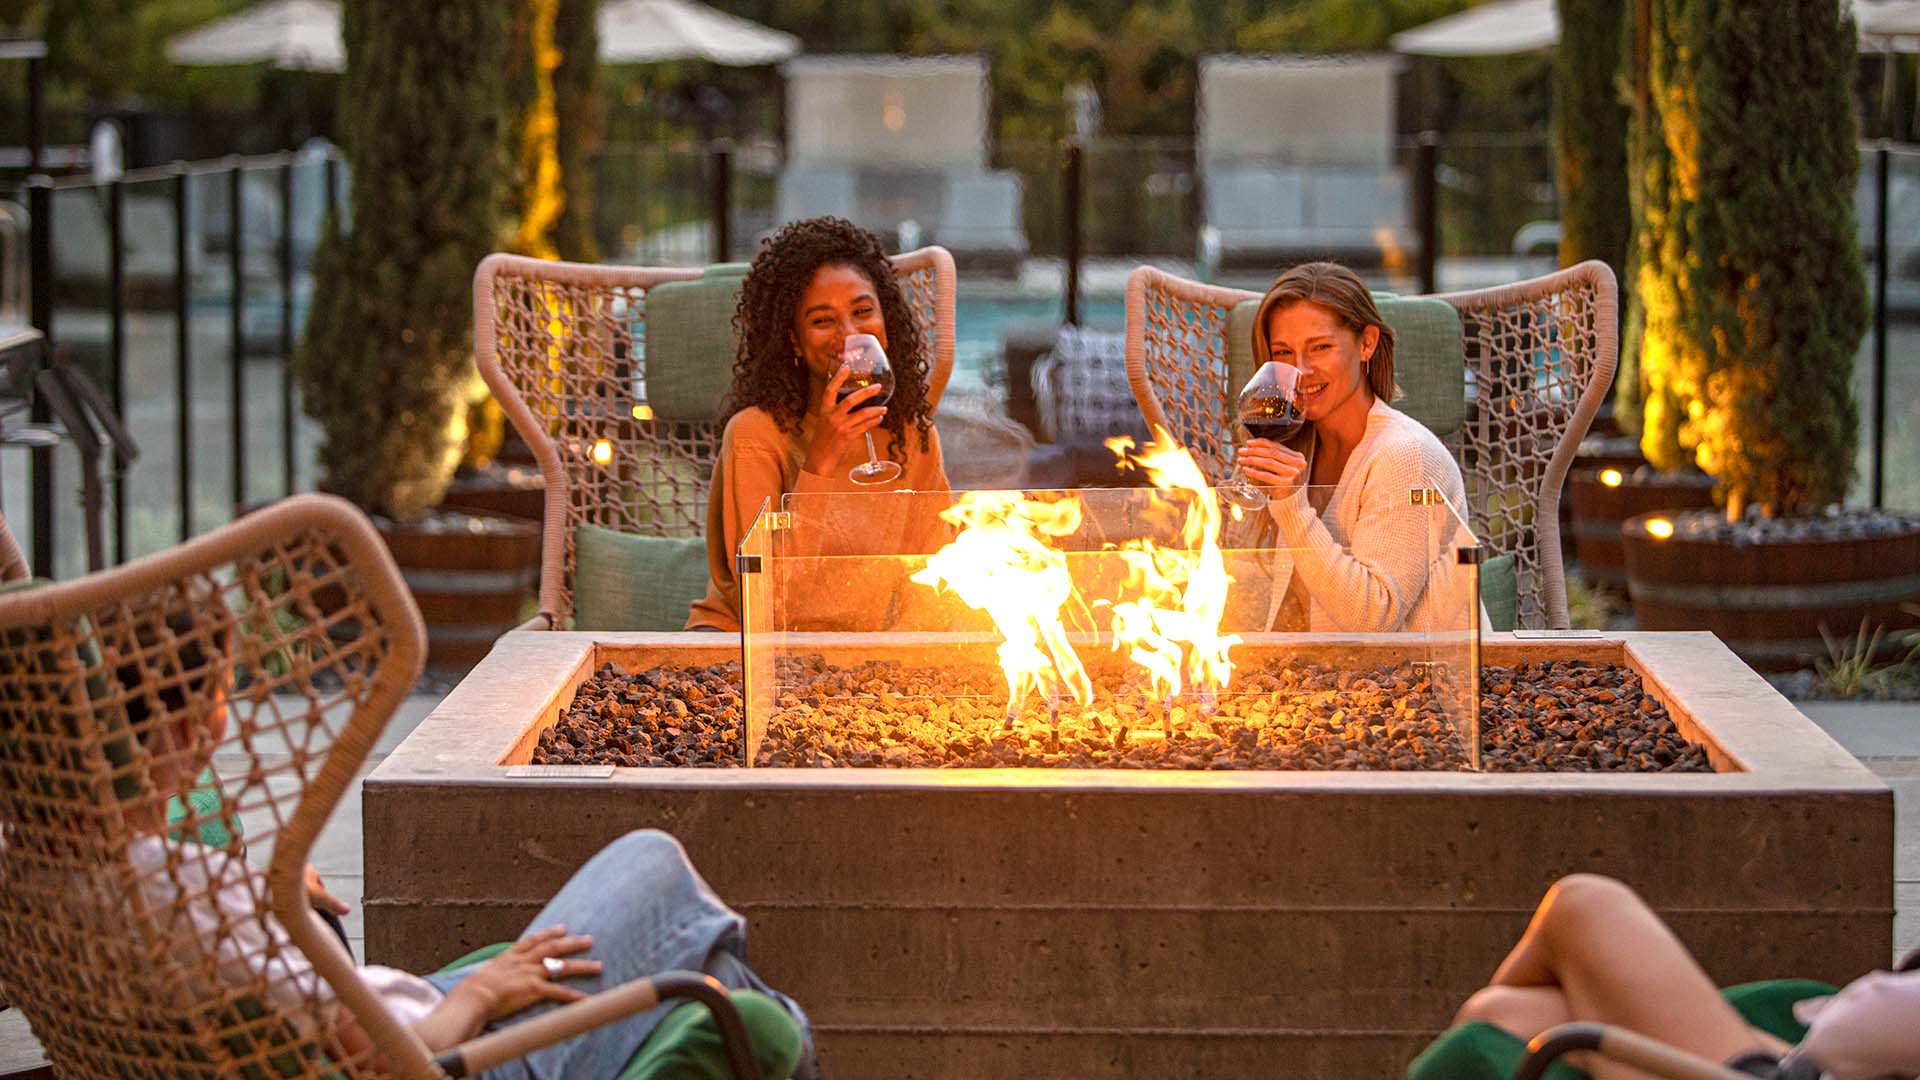 Girls with wine around pool deck firepit